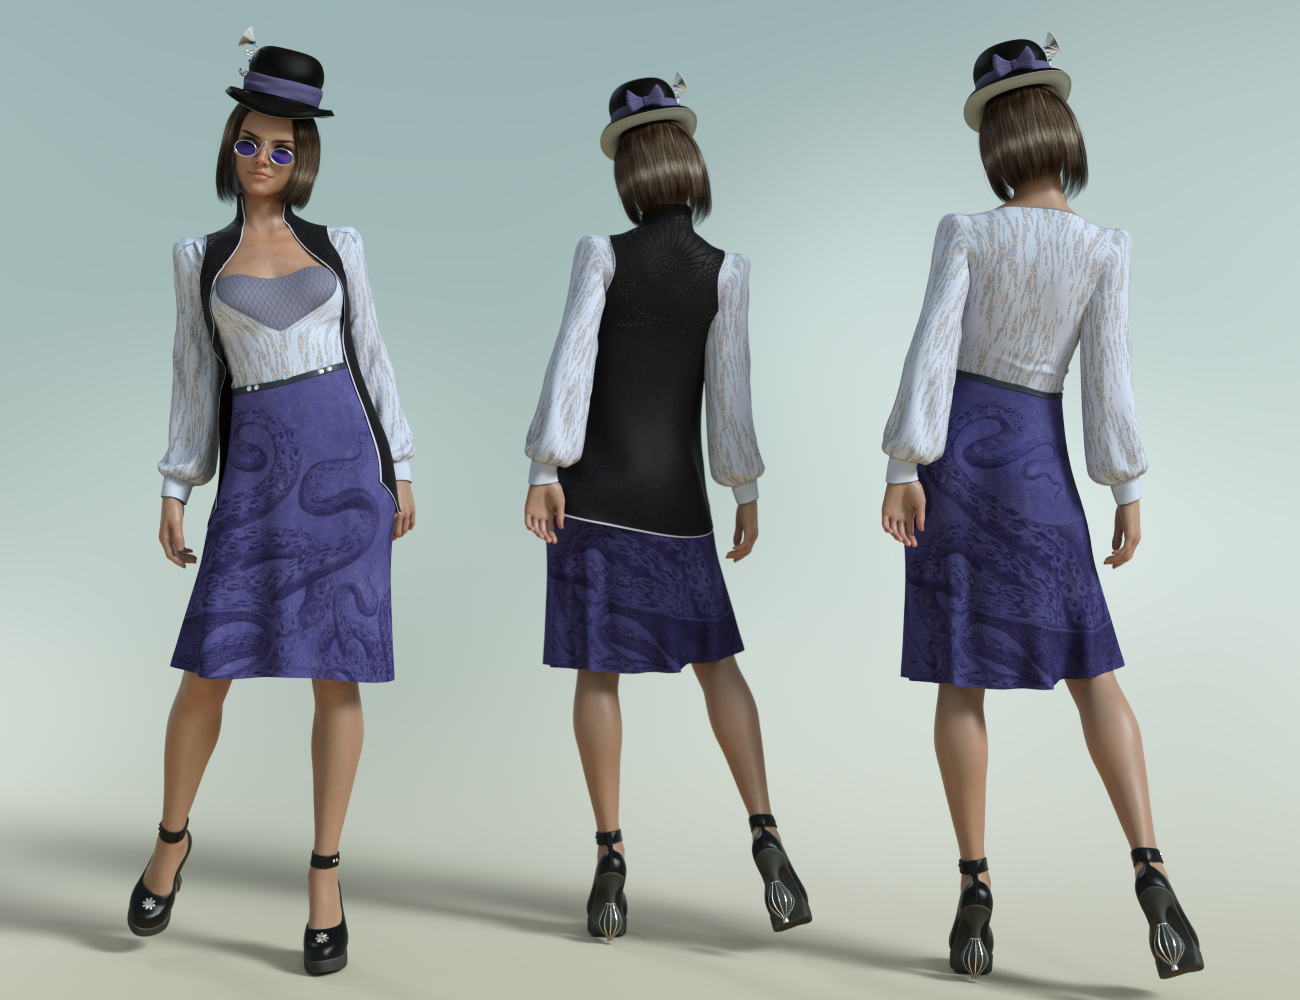 dForce Constance Outfit for Genesis 8 Females by: AmaranthPixelTizzyFit, 3D Models by Daz 3D